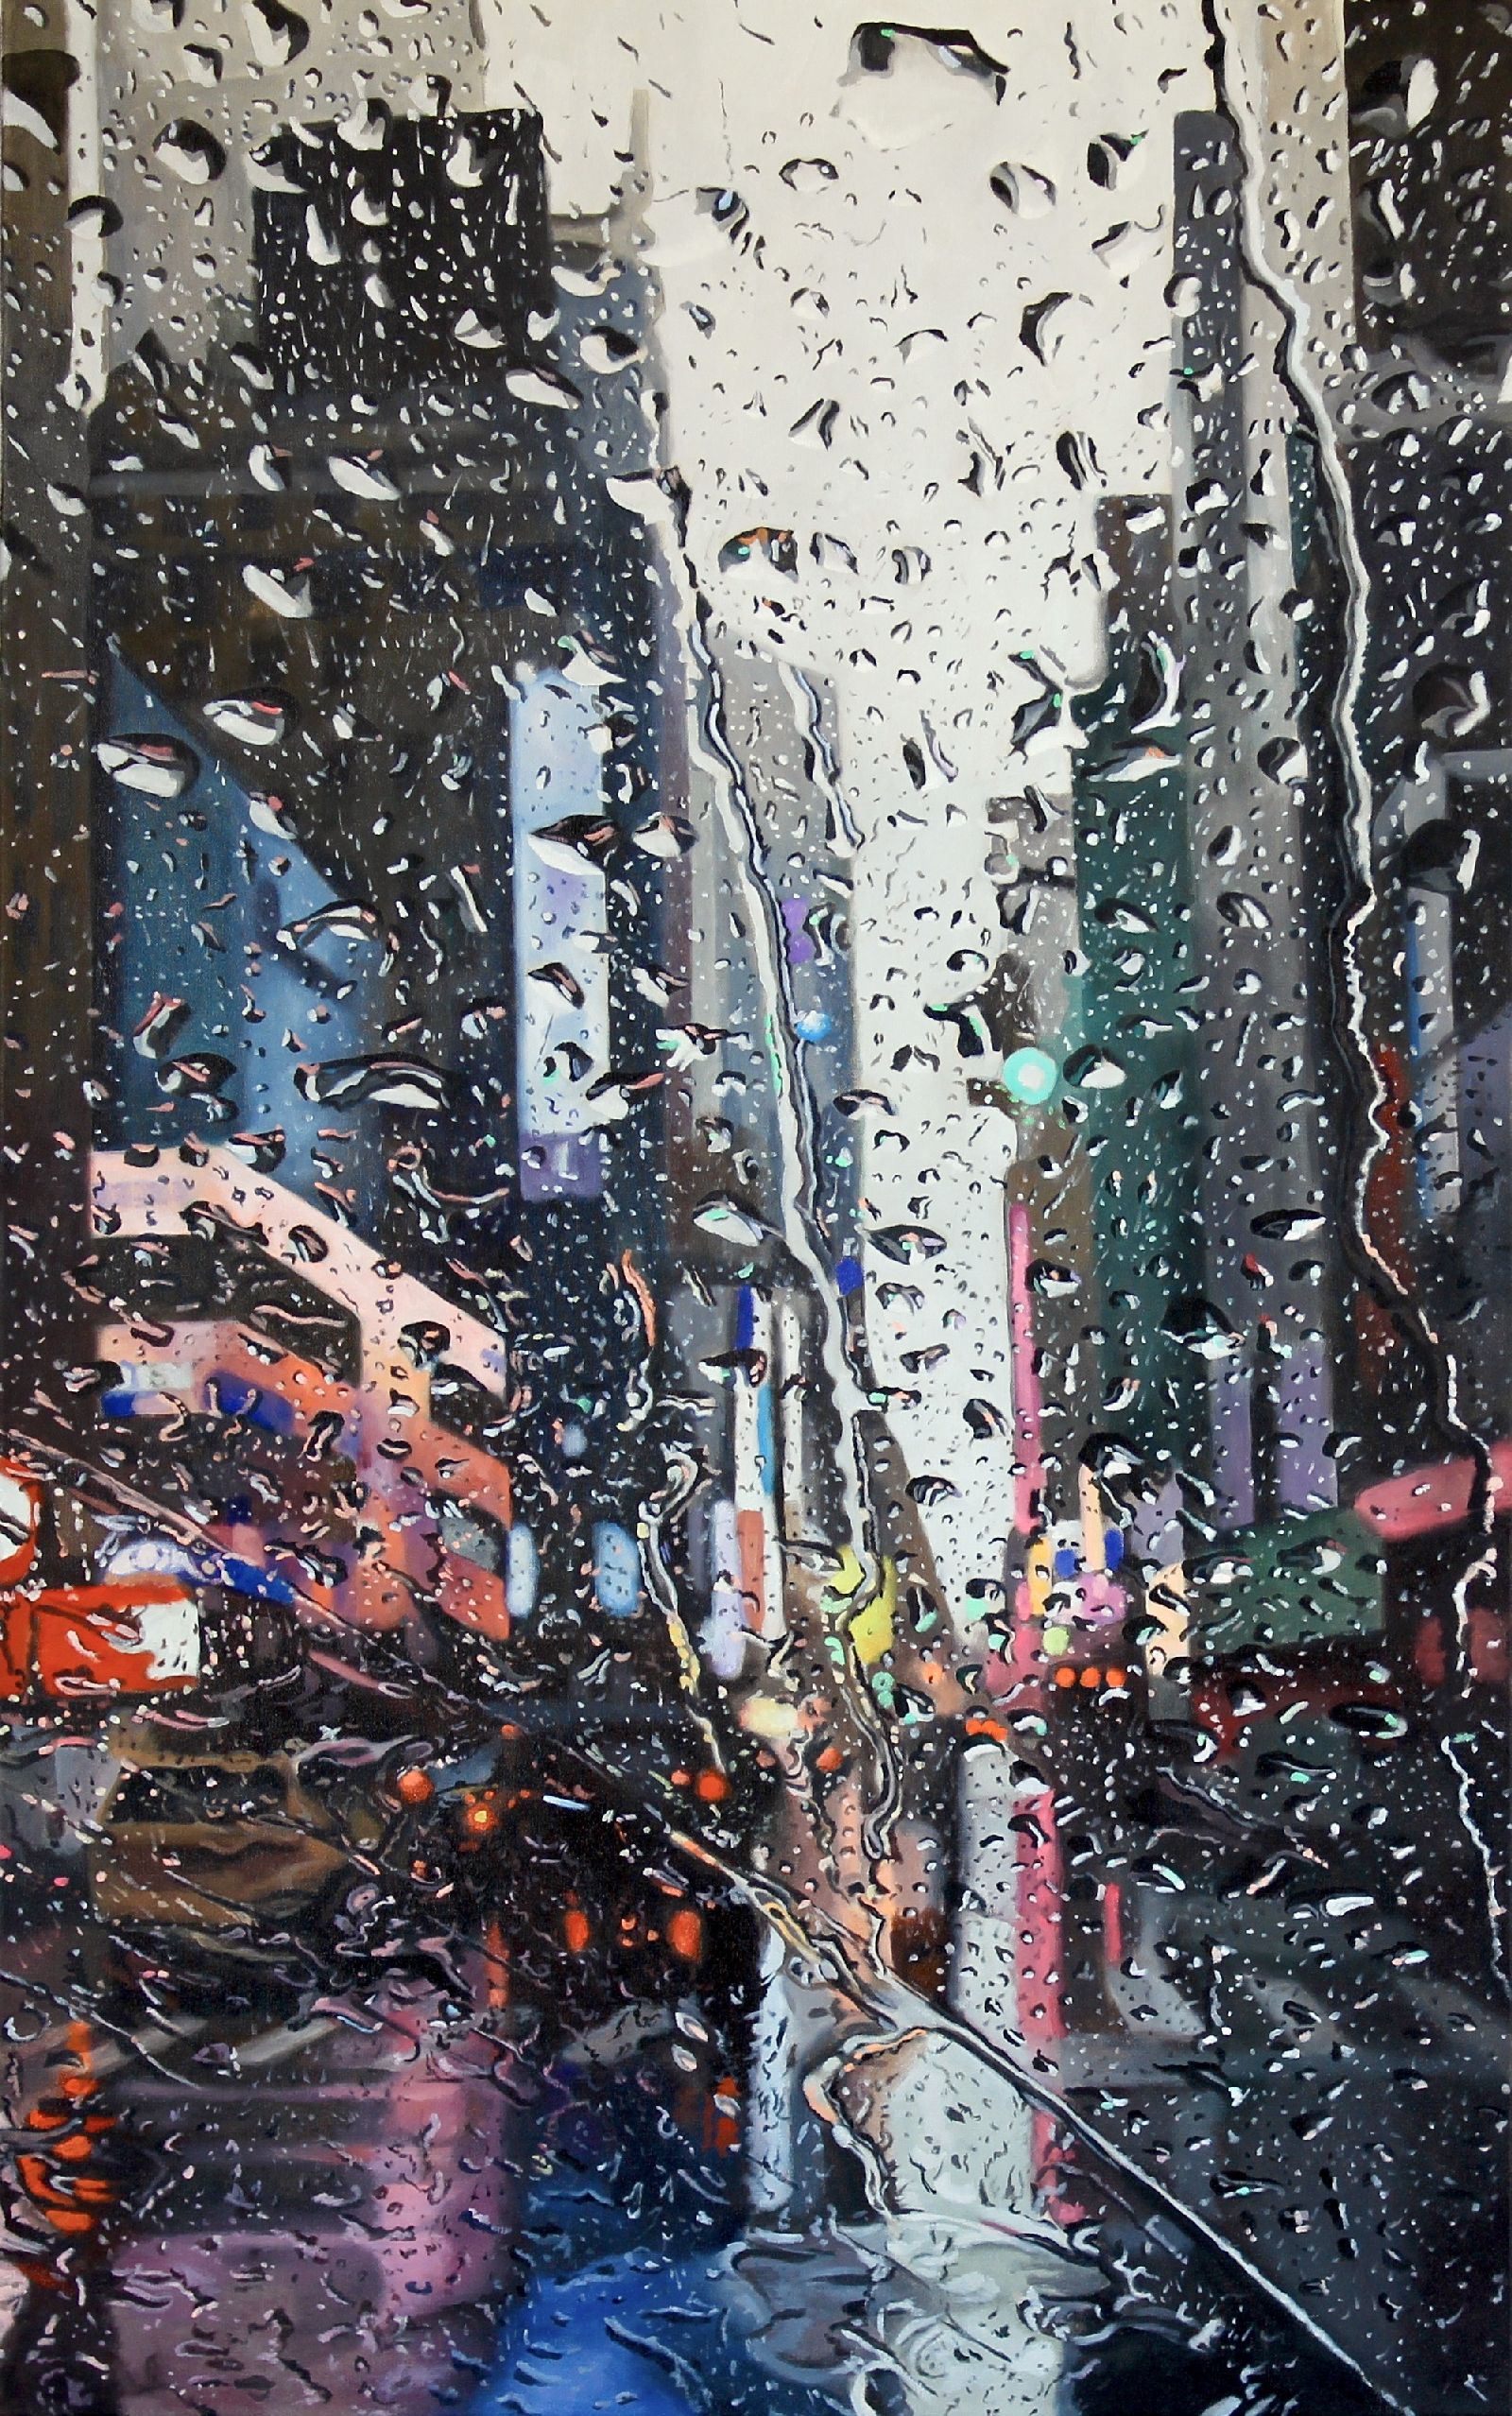  Seventh Avenue Rains  by Michael  Steinbrick